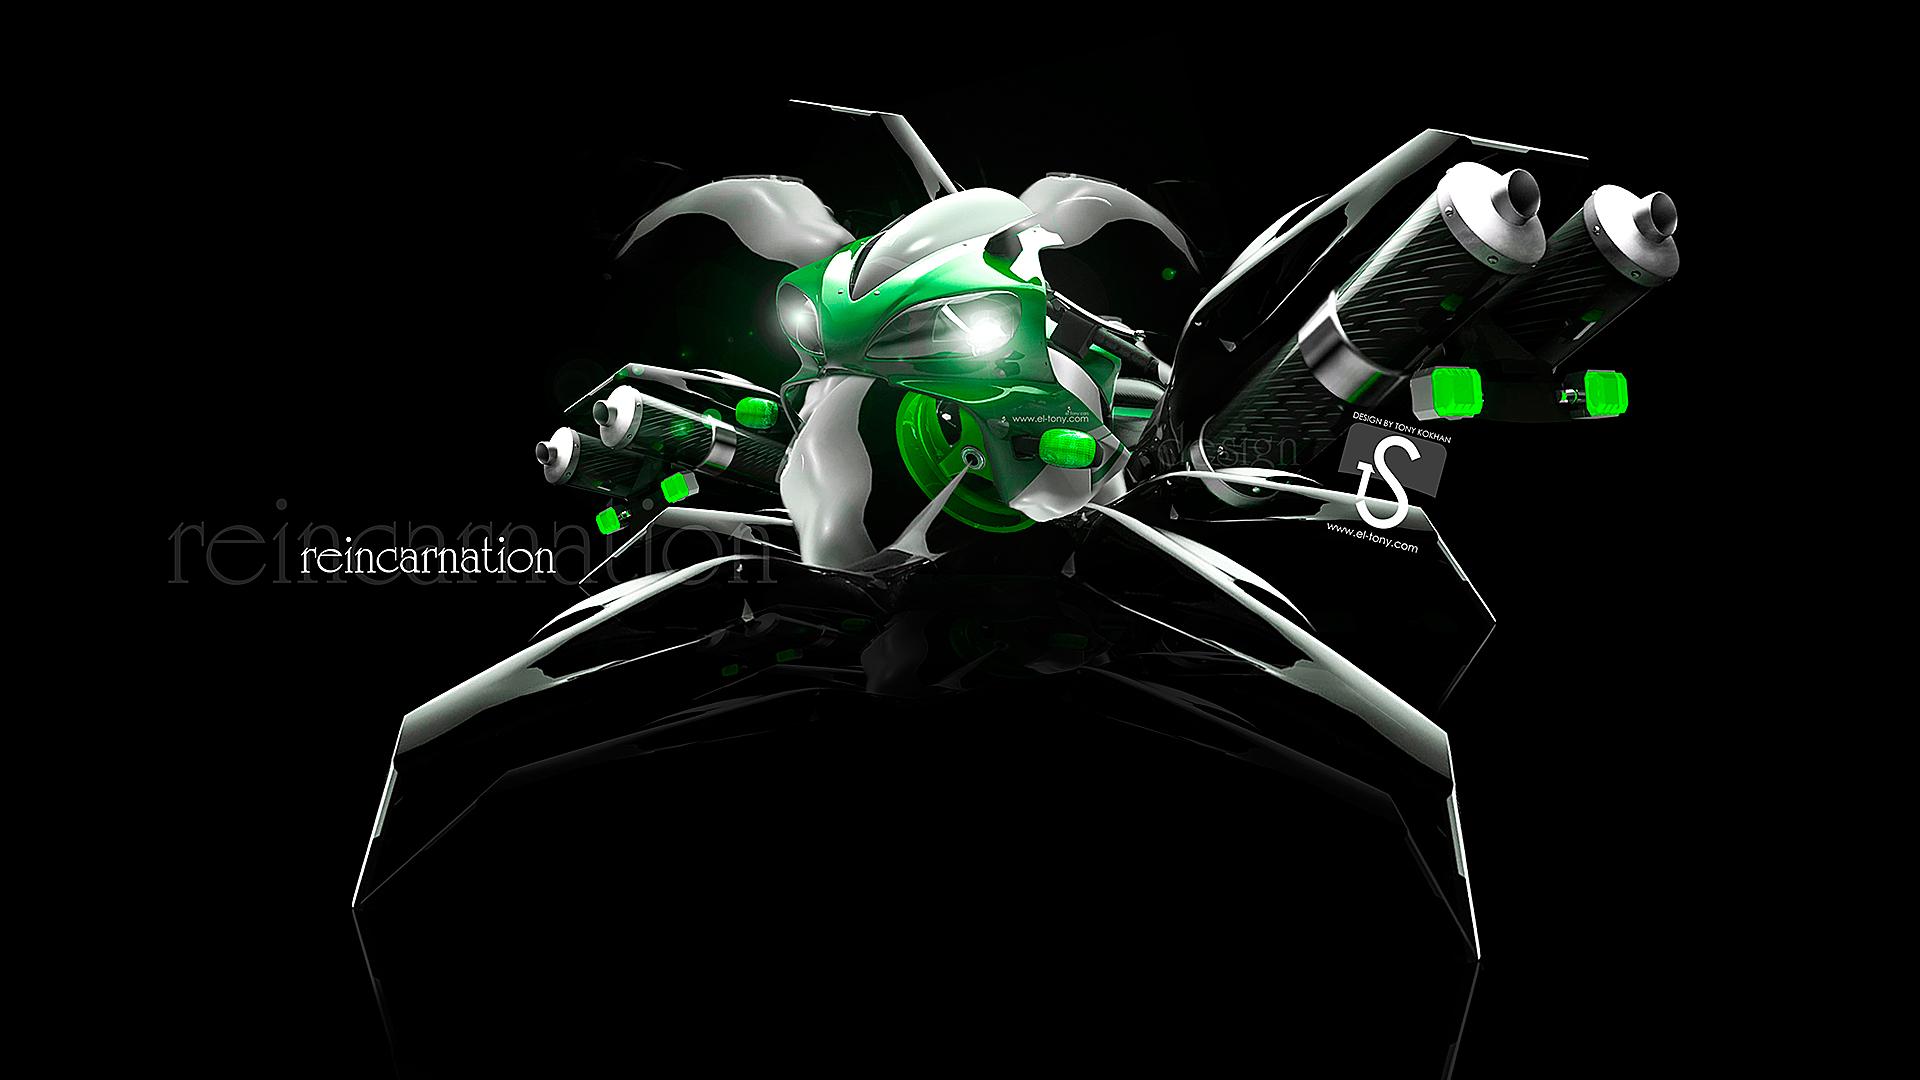 Reincarnation Moto Green Robot Car 2012 HD Wallpaper Design By Tony